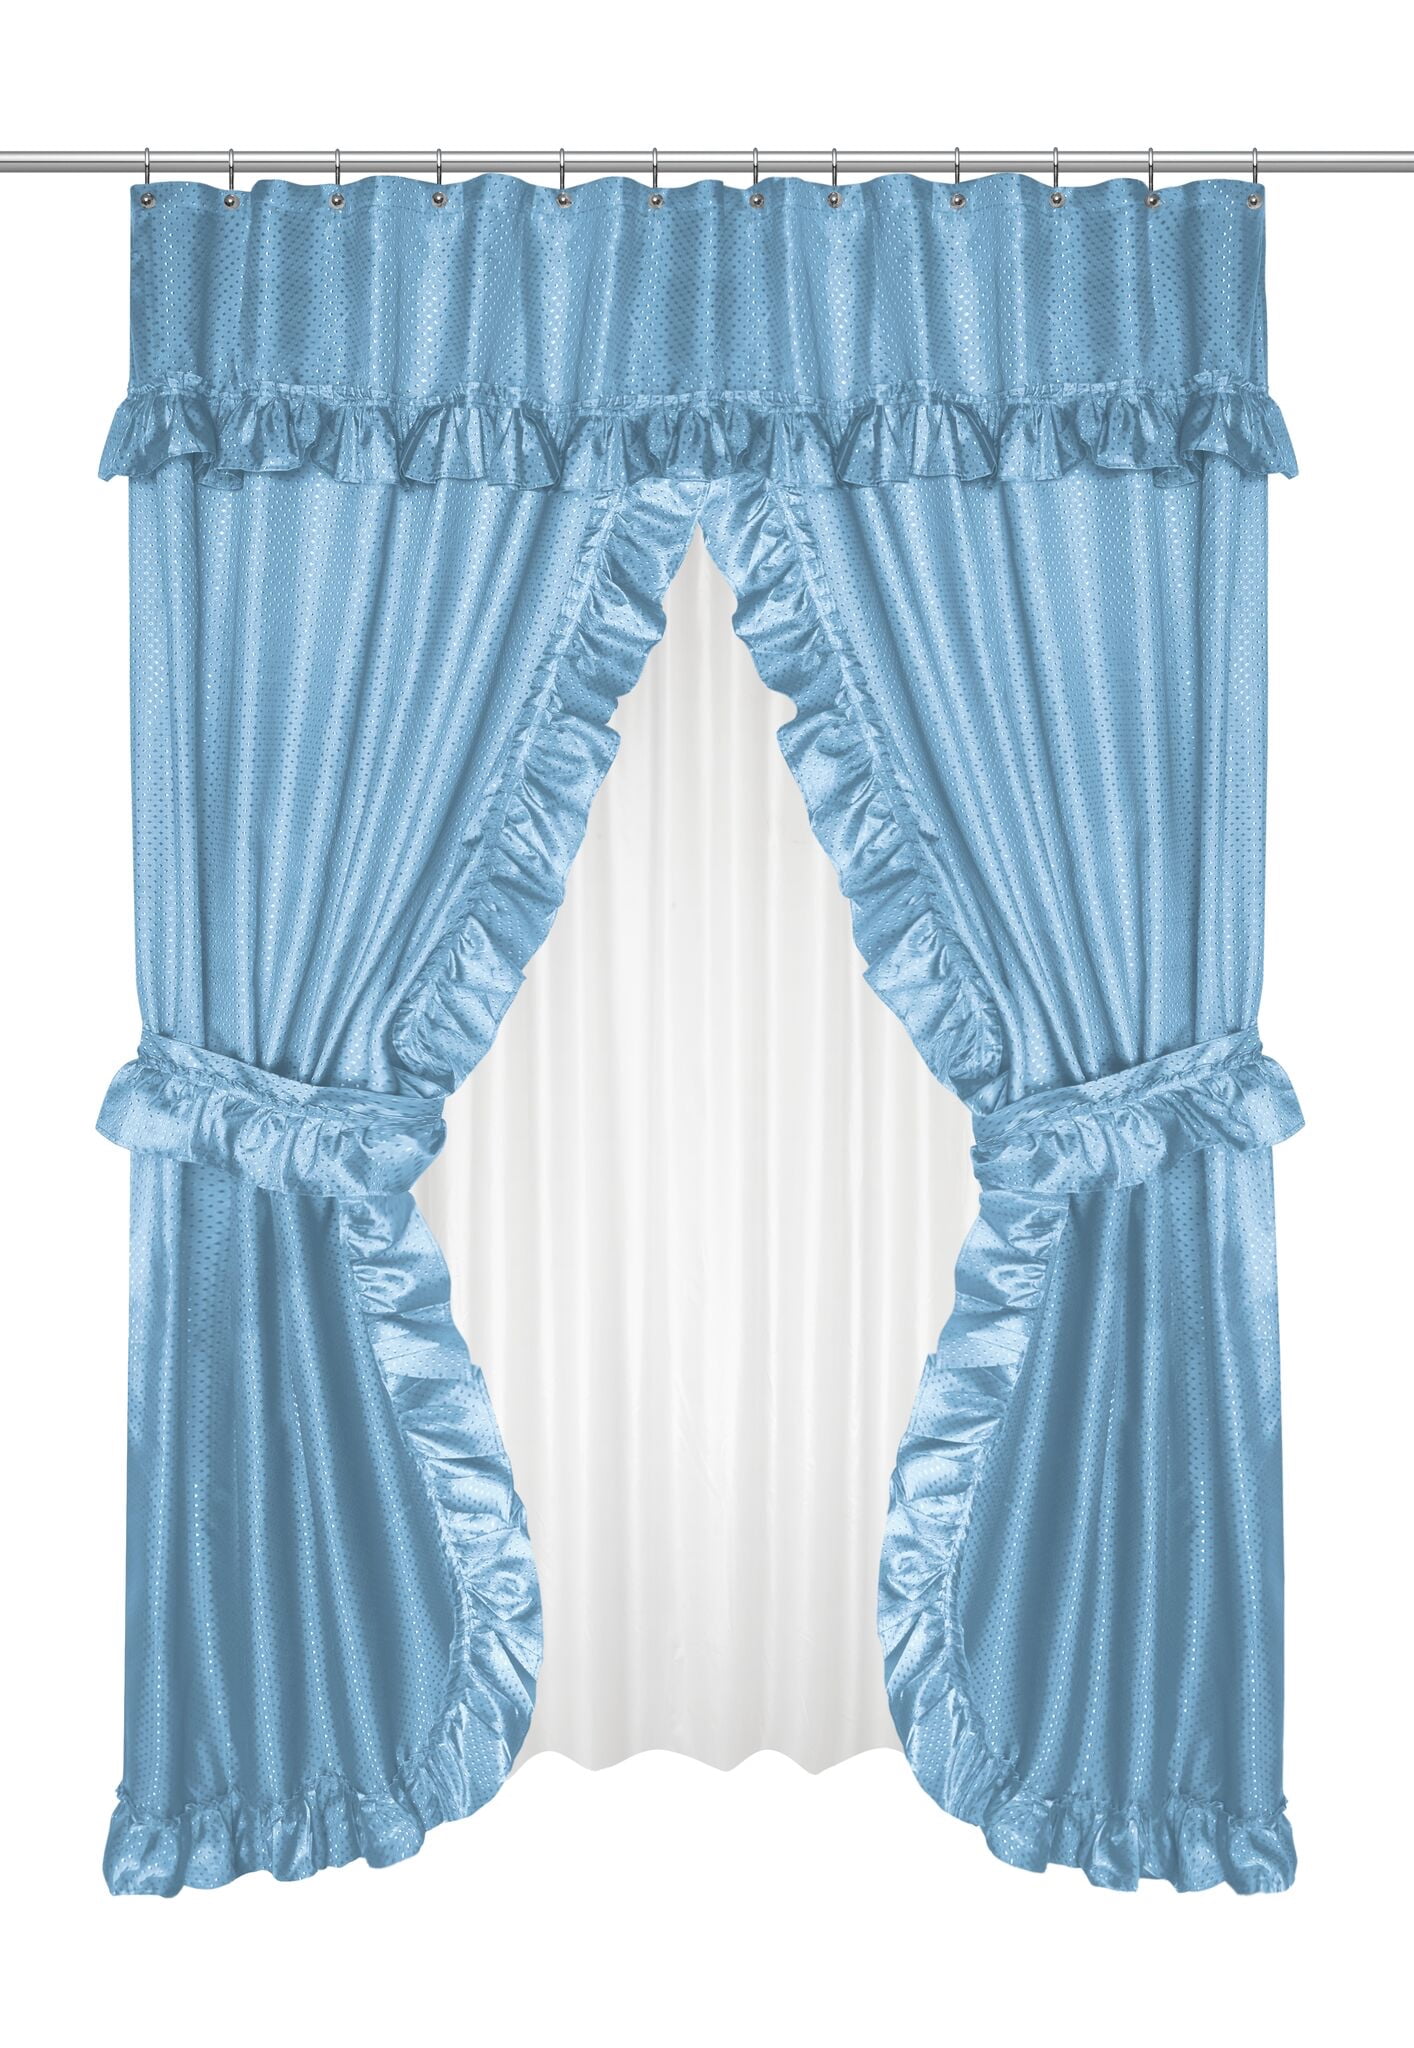 GoodGram Lauren Complete 5 Piece Attached Shower Curtain amp Valance Set 